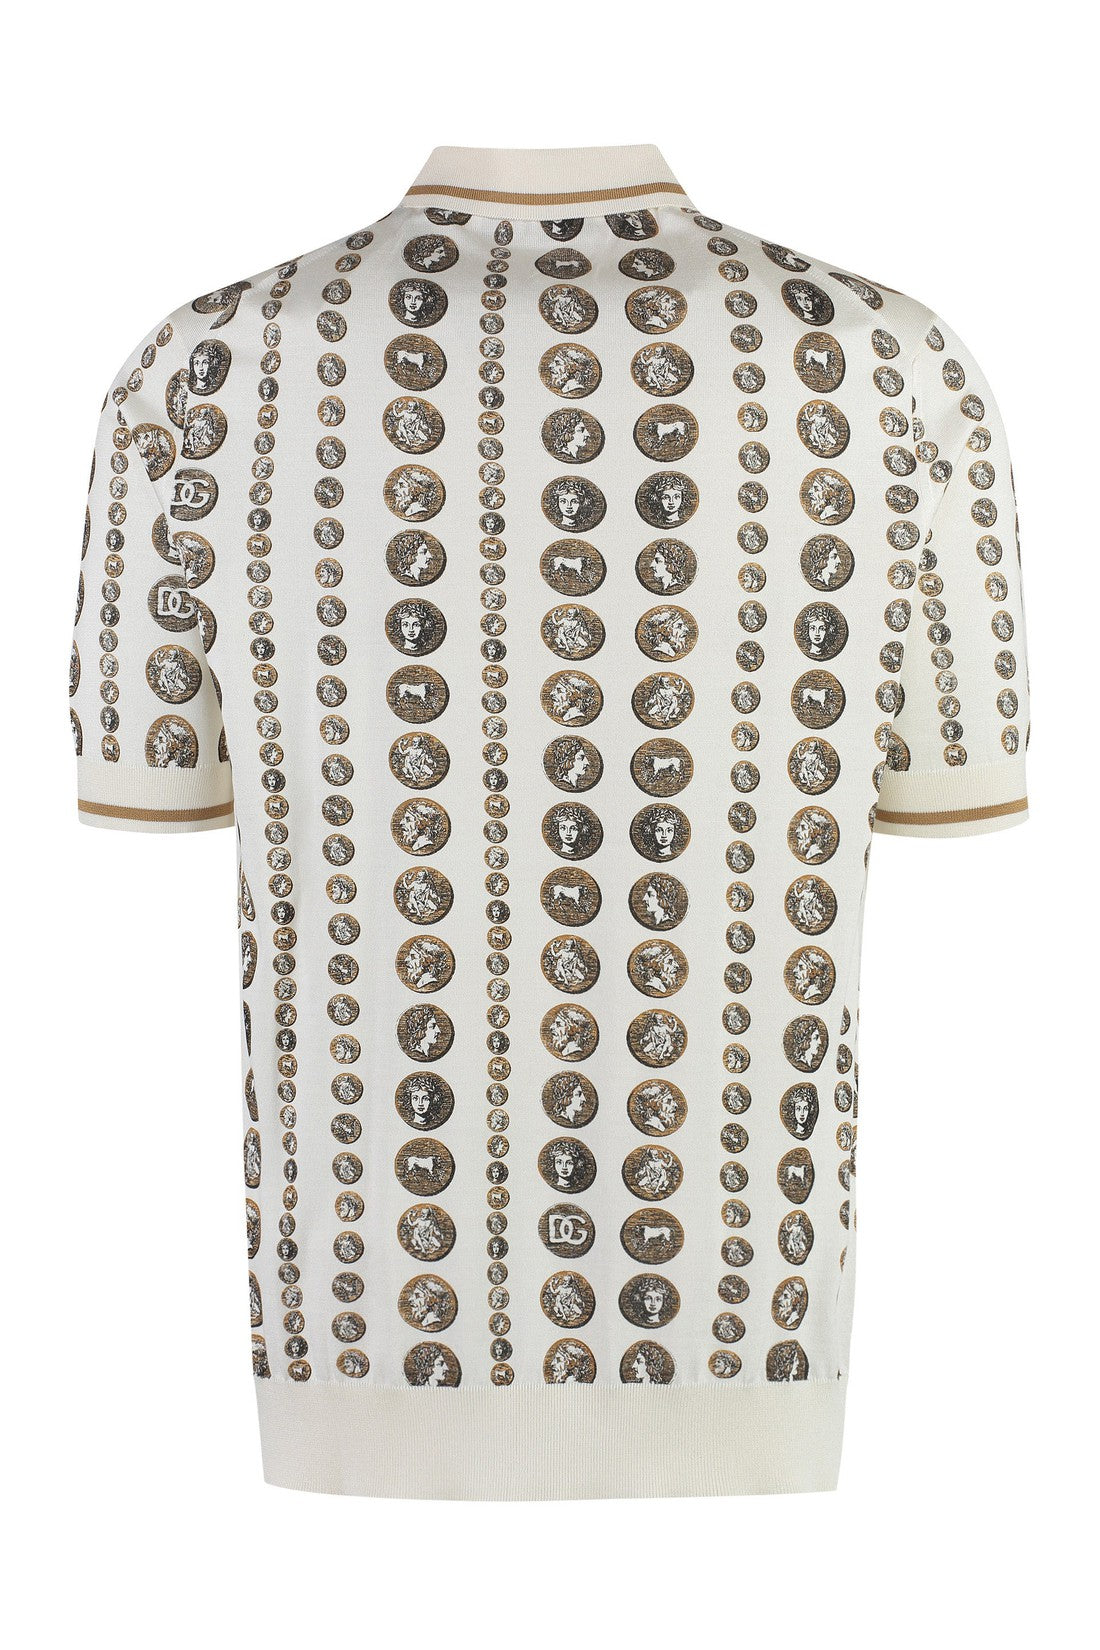 Dolce & Gabbana-OUTLET-SALE-Silk-knit polo shirt-ARCHIVIST